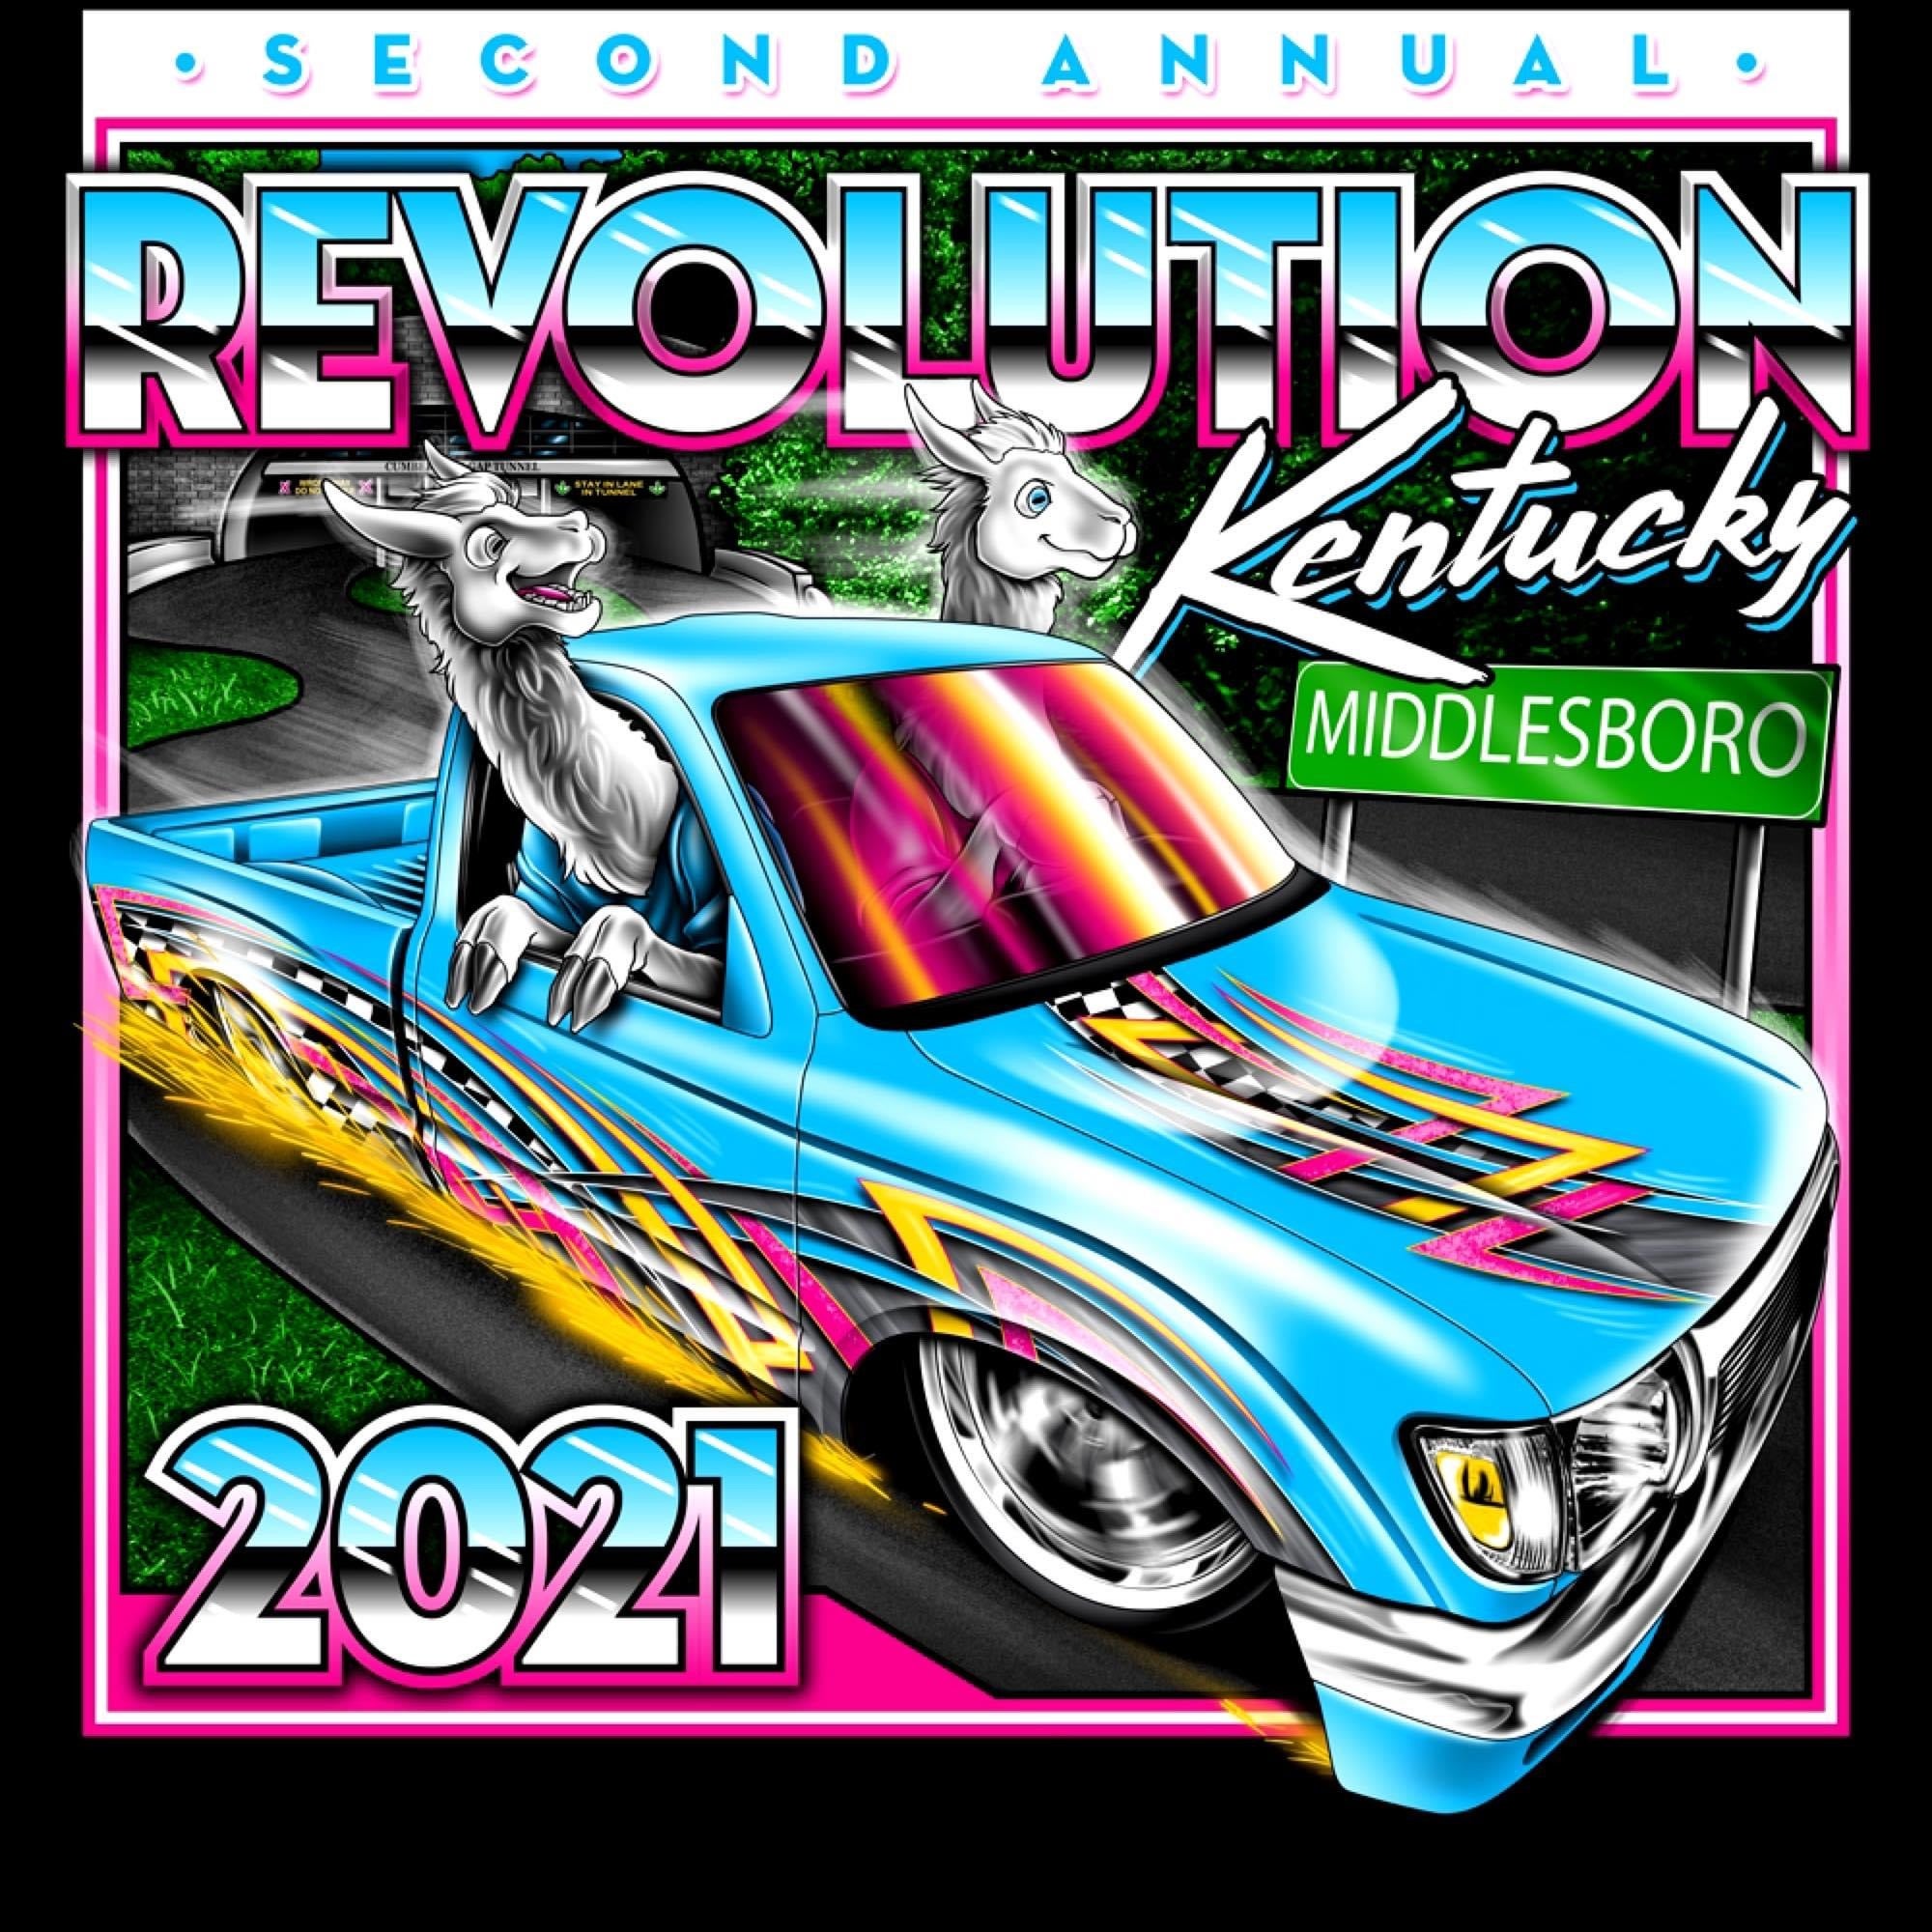 Revolution Kentucky car show hits downtown Middlesboro News